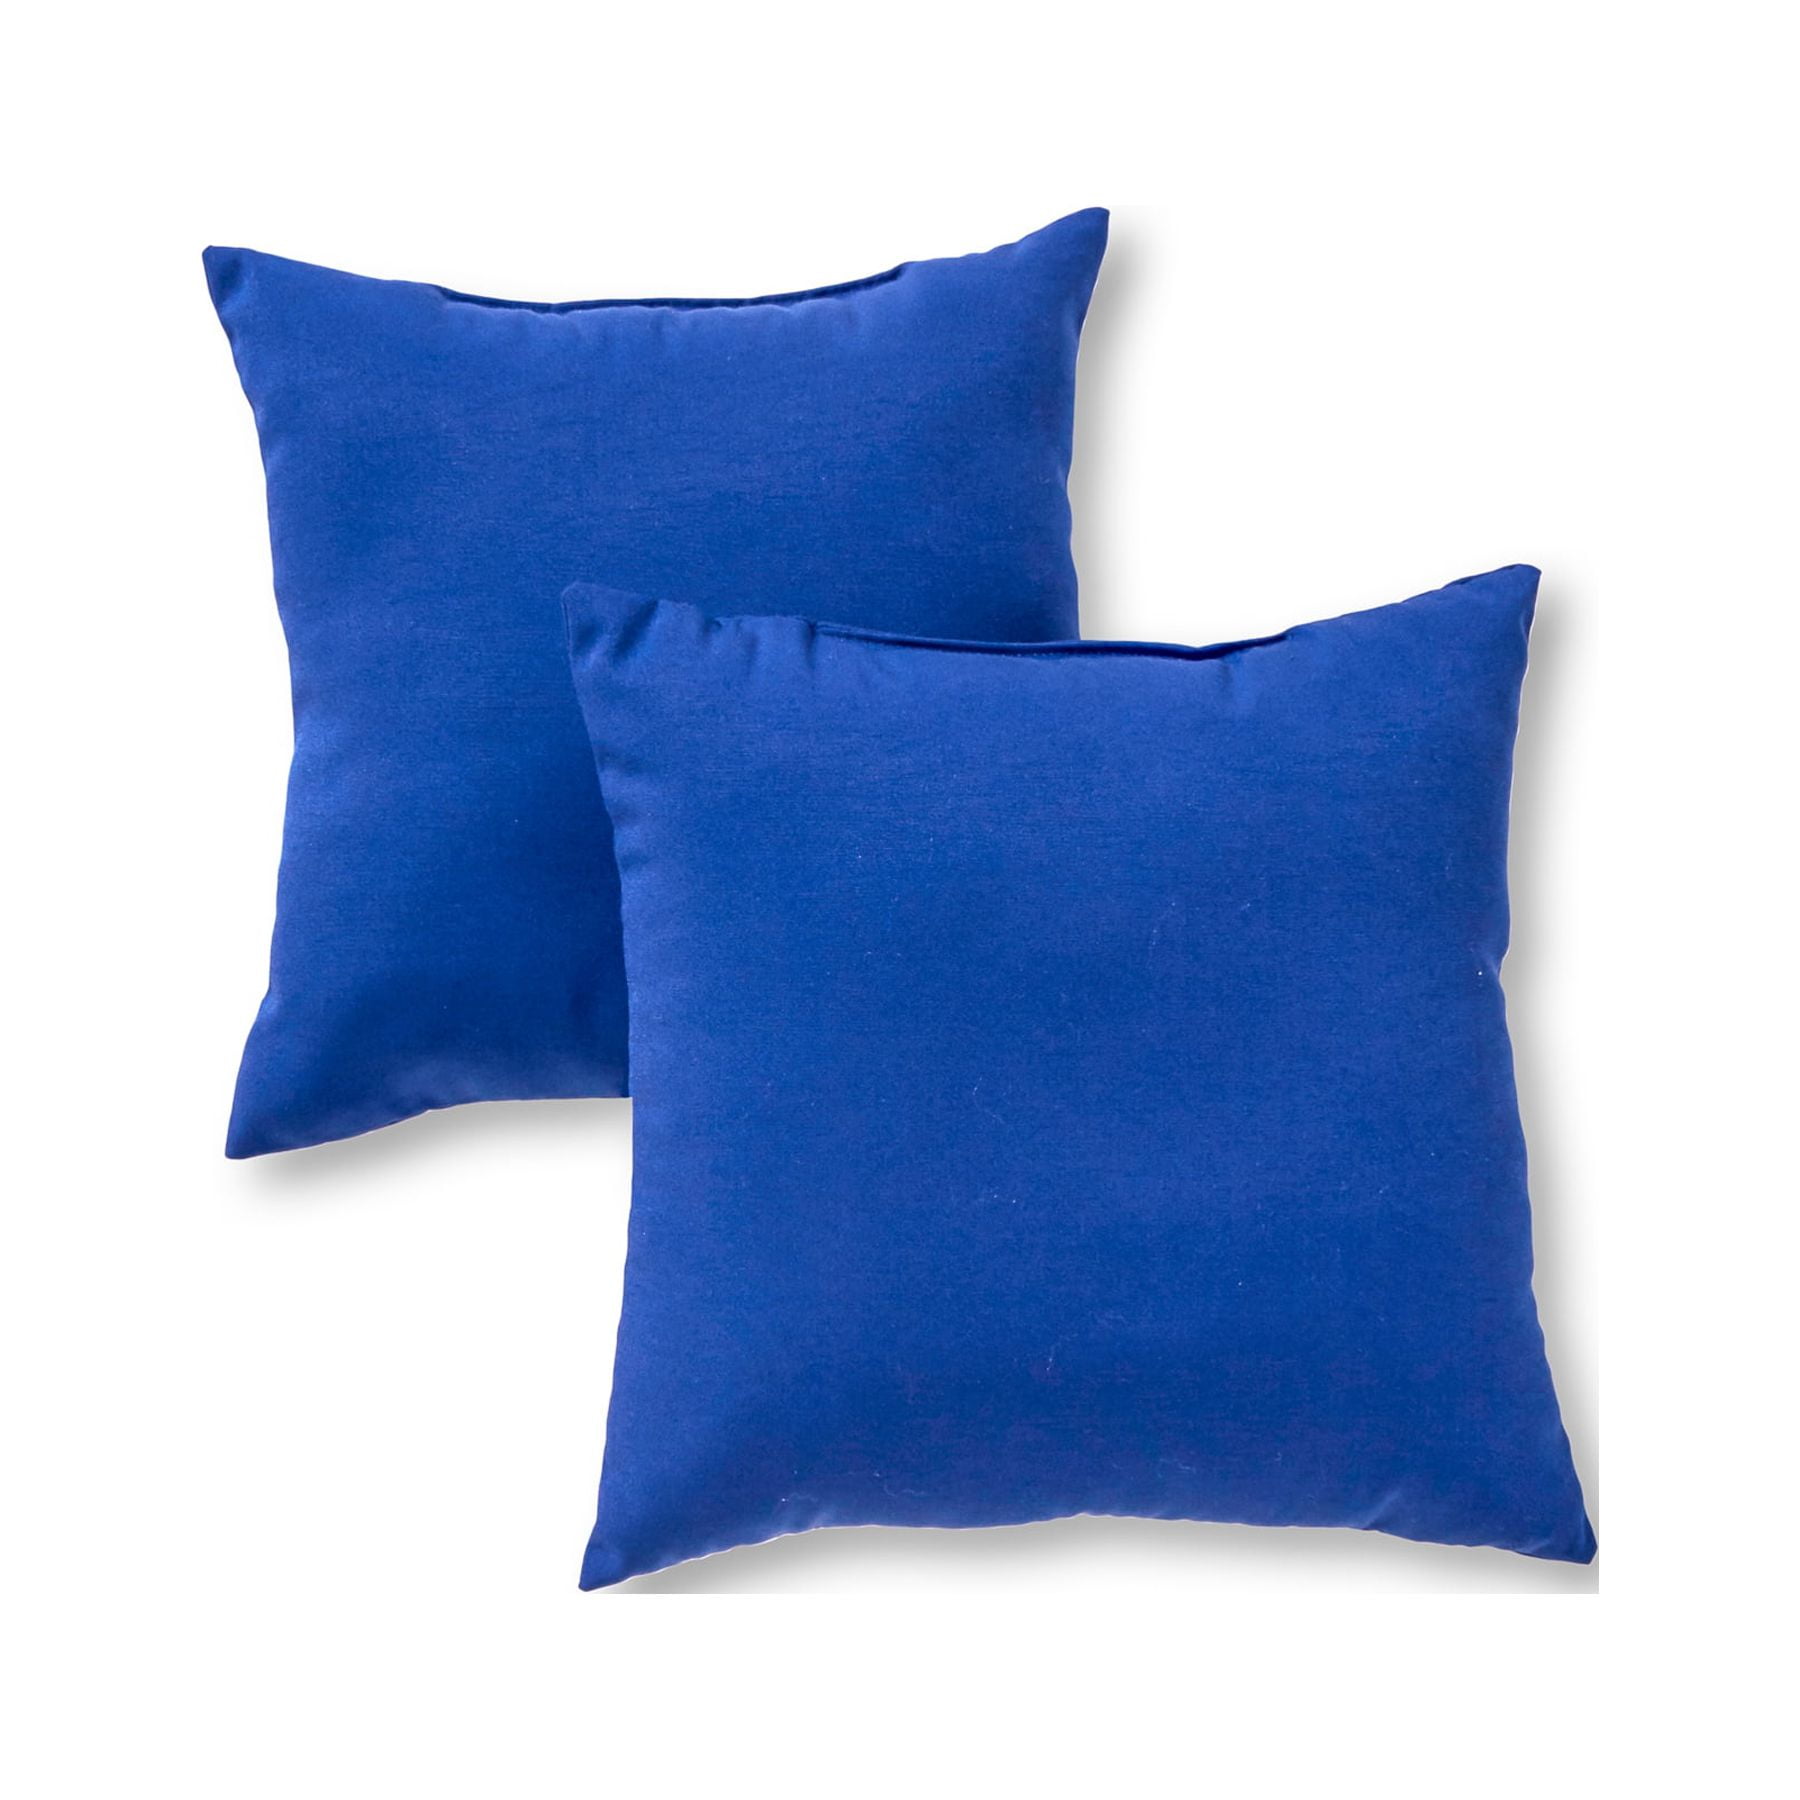 Springdale Blue Decorative Throw Pillow Set of 2 – Latest Bedding